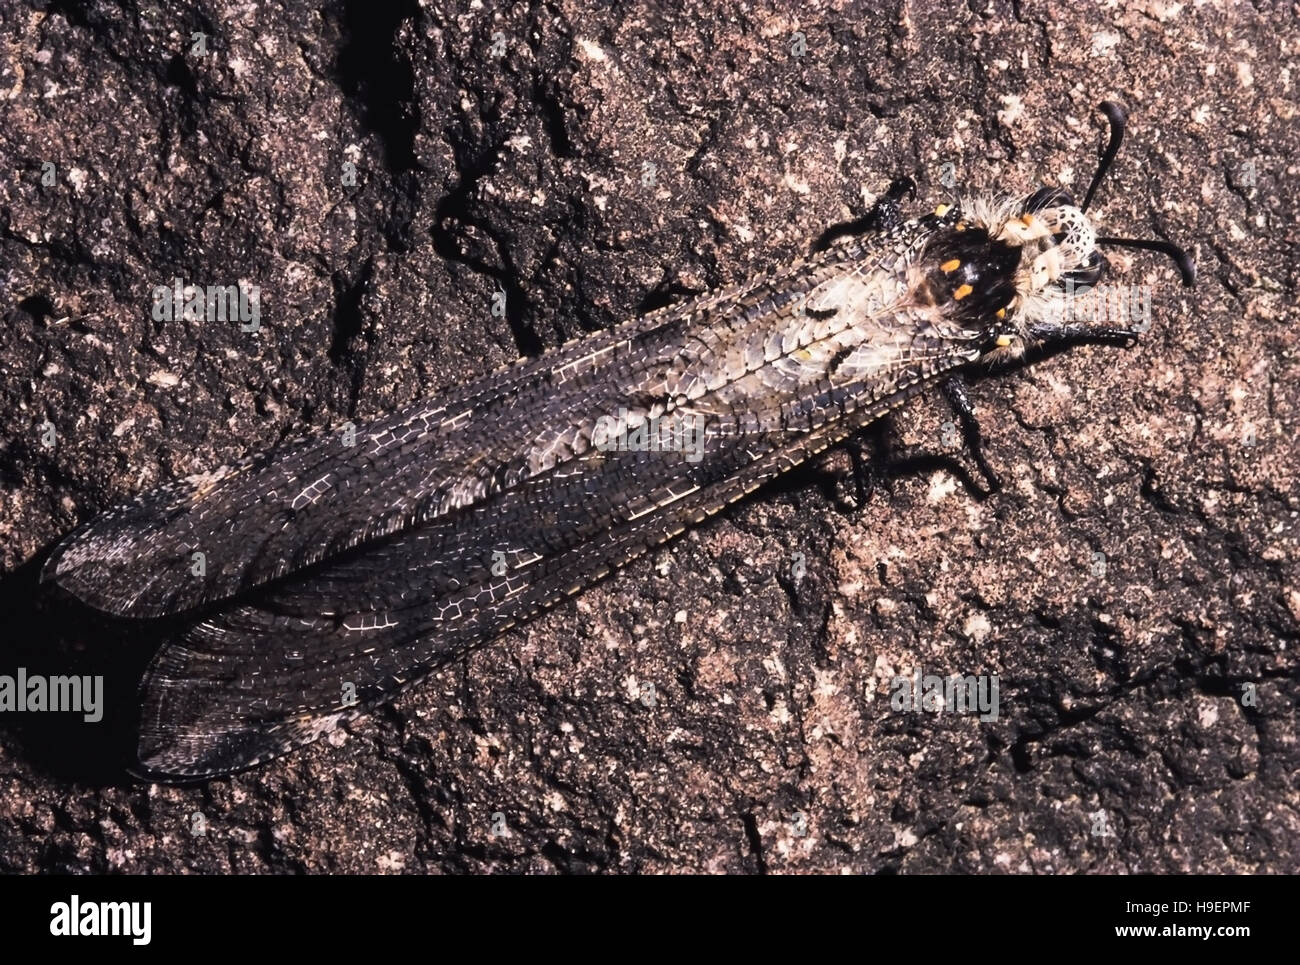 Neuropteran. Pune district, Maharashtra, India. Stock Photo